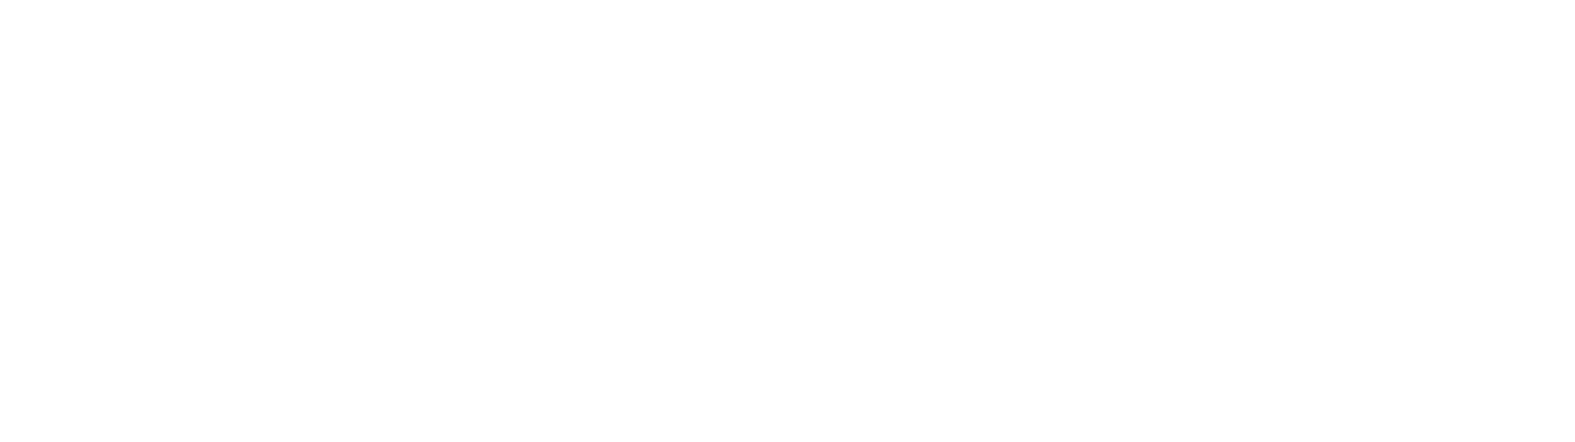 National Bank of Canada
 logo large for dark backgrounds (transparent PNG)